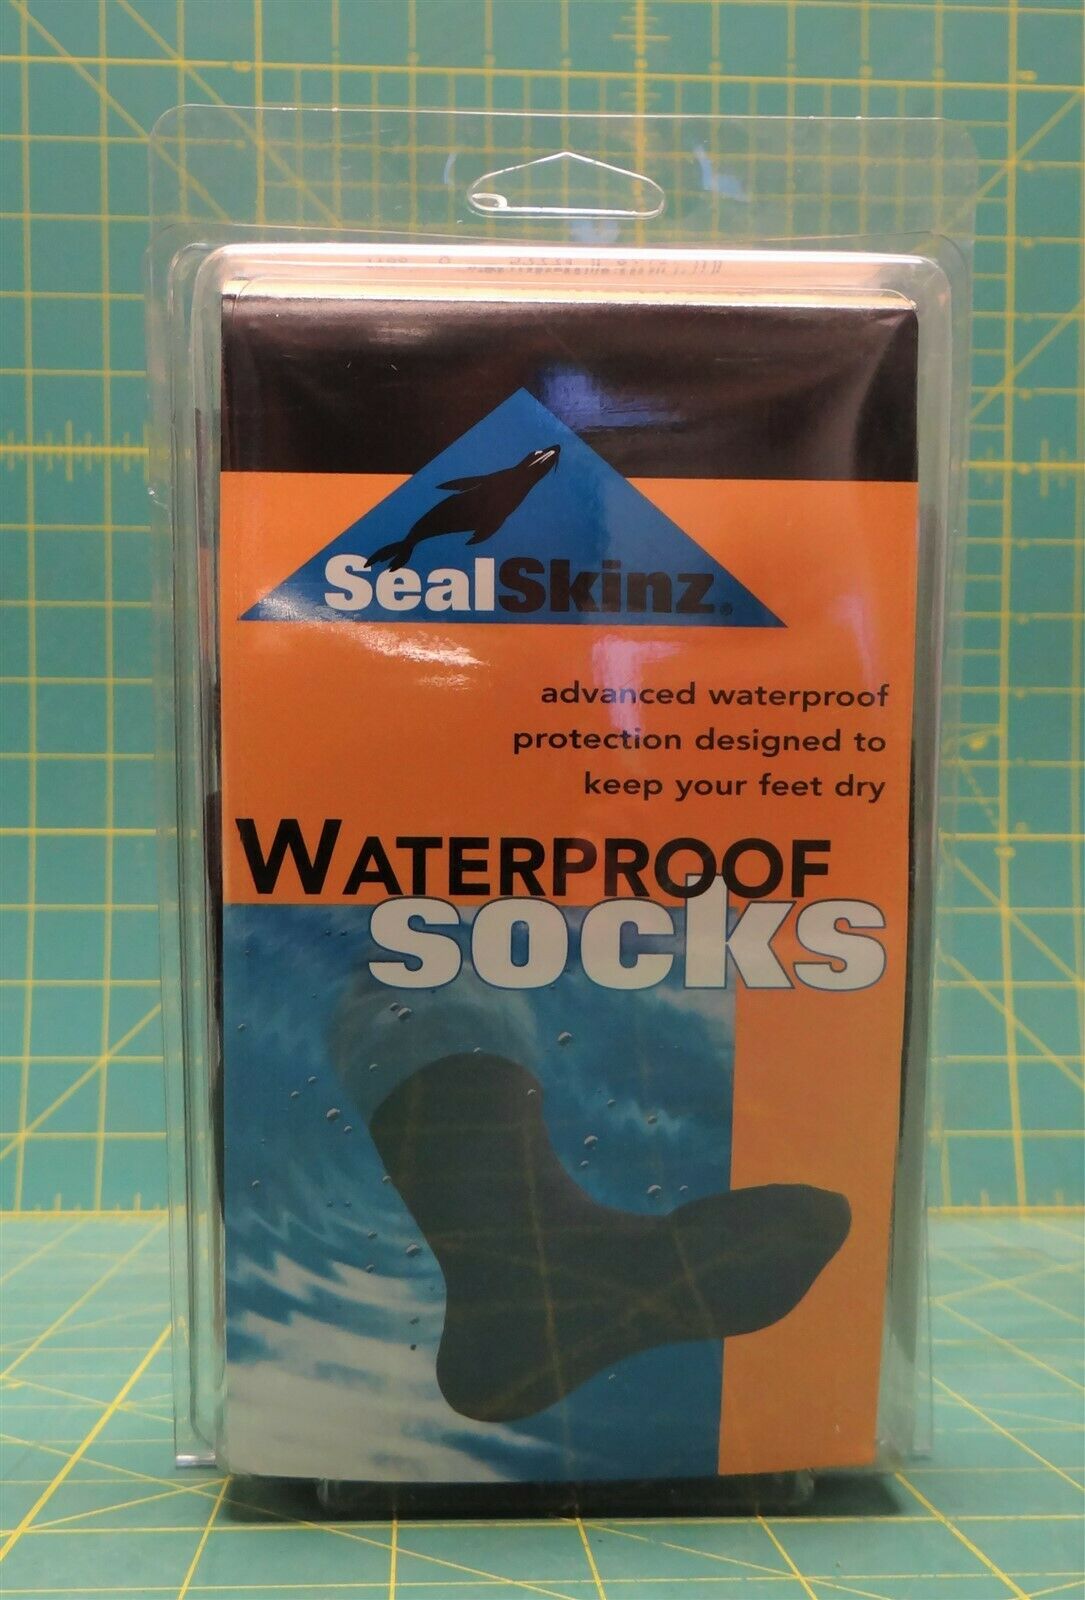 Sealskinz Waterproof 15" Over The Calf Socks, Size Small, Men's 5-6, Women's 6-7